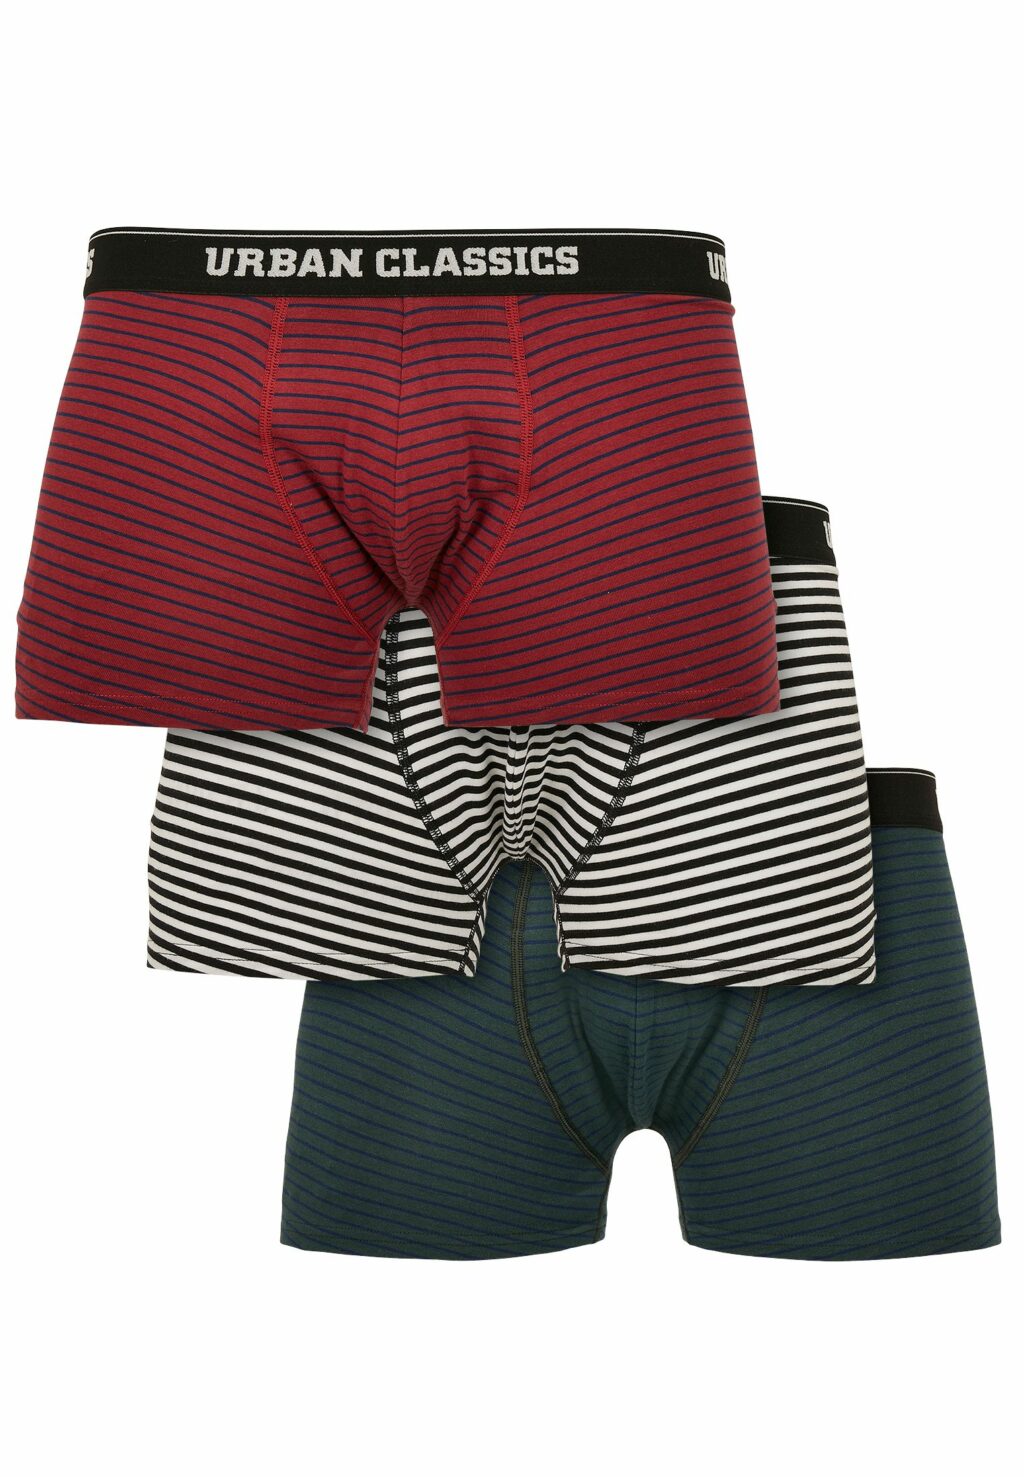 Urban Classics Boxer Shorts 3-Pack btlgrn/dkblu+bur/dkblu+wht/blk TB3844